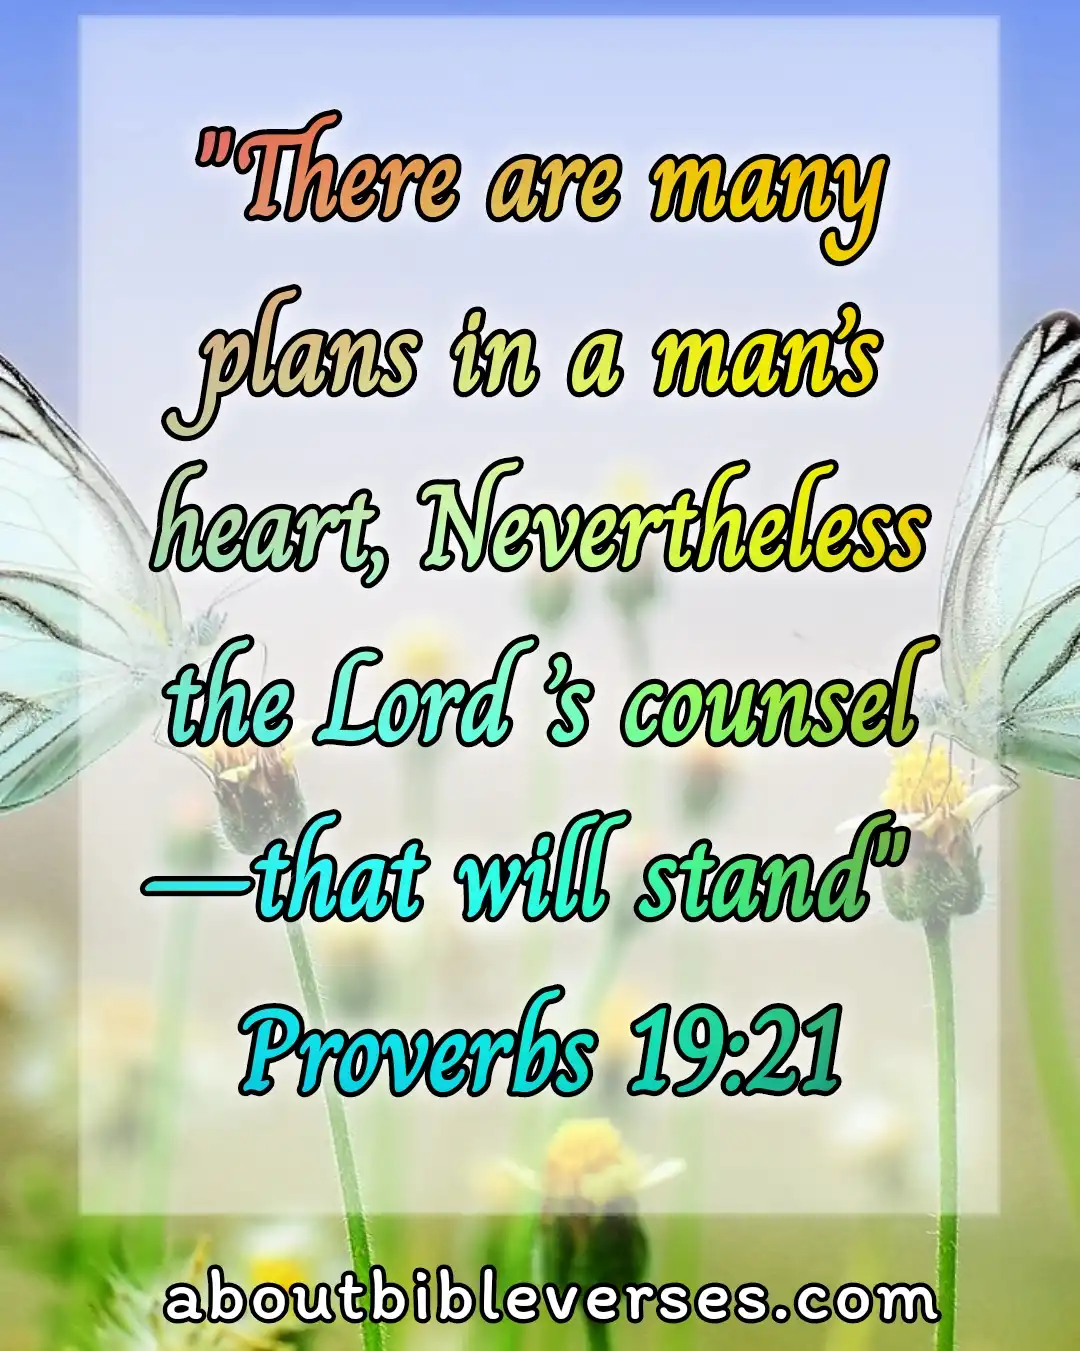 Today Bible verse (Proverbs 19:21)